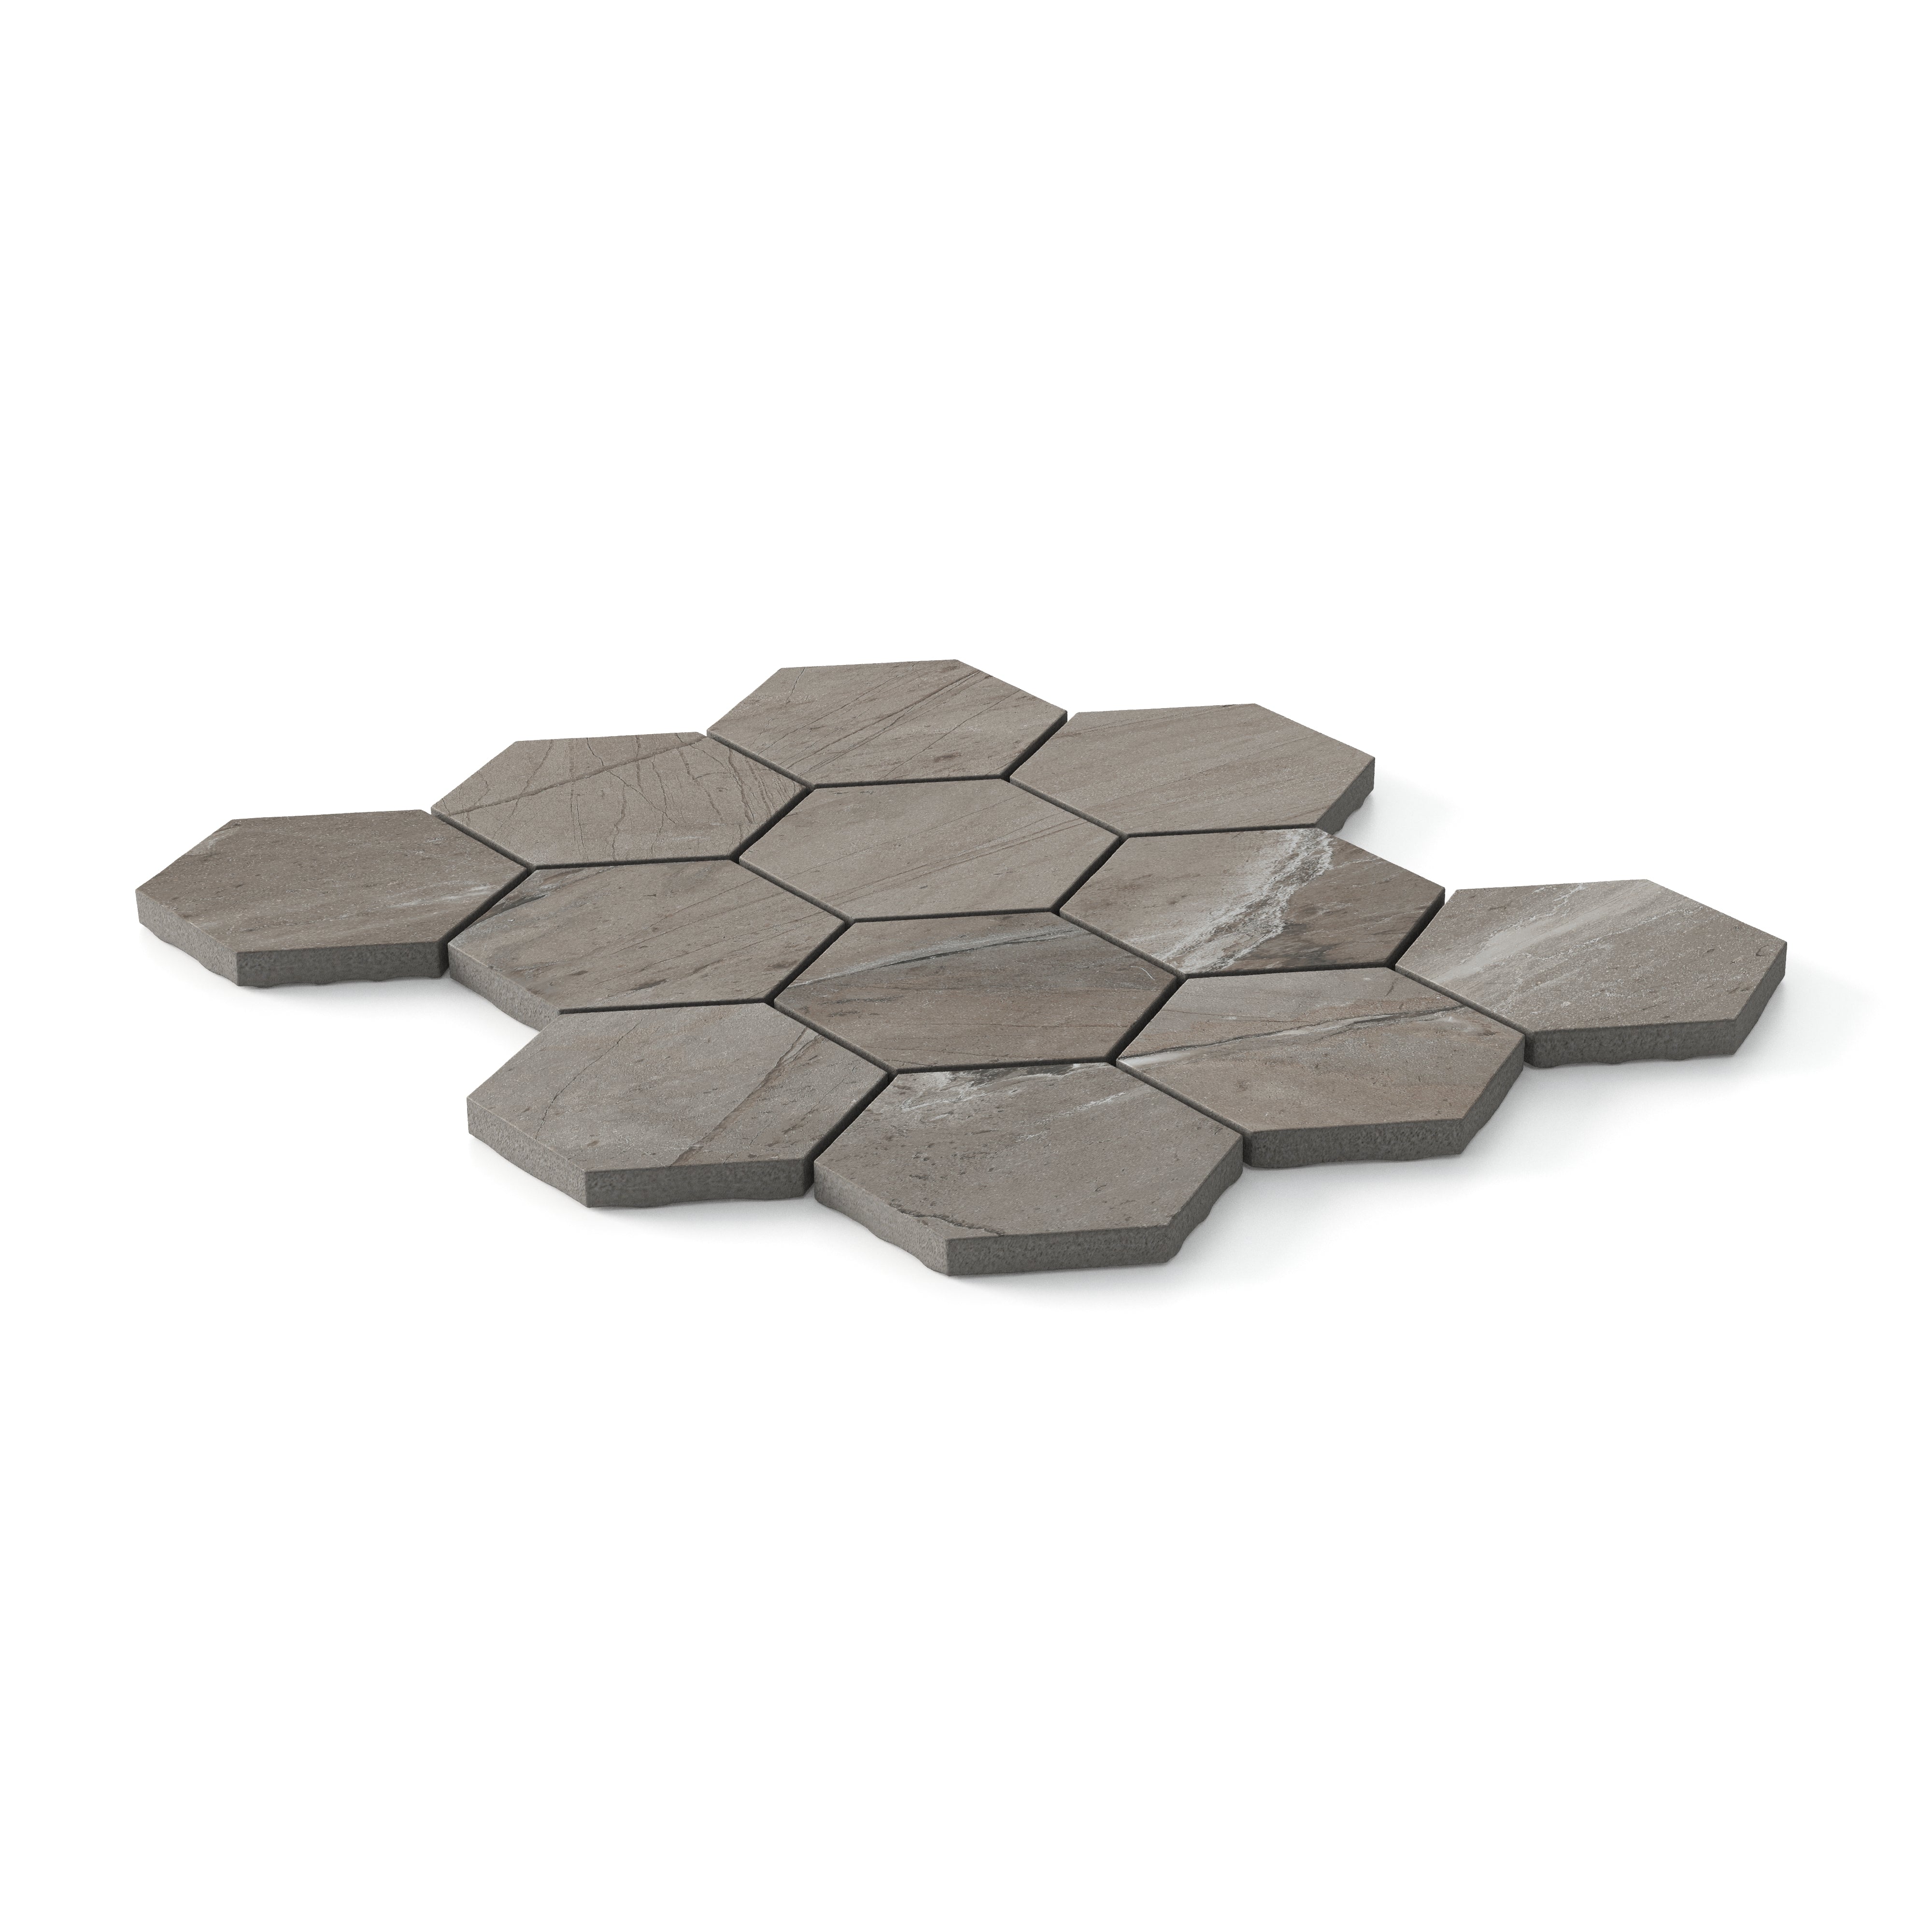 Declan 3x3 Matte Porcelain Hexagon Mosaic Tile in Mink